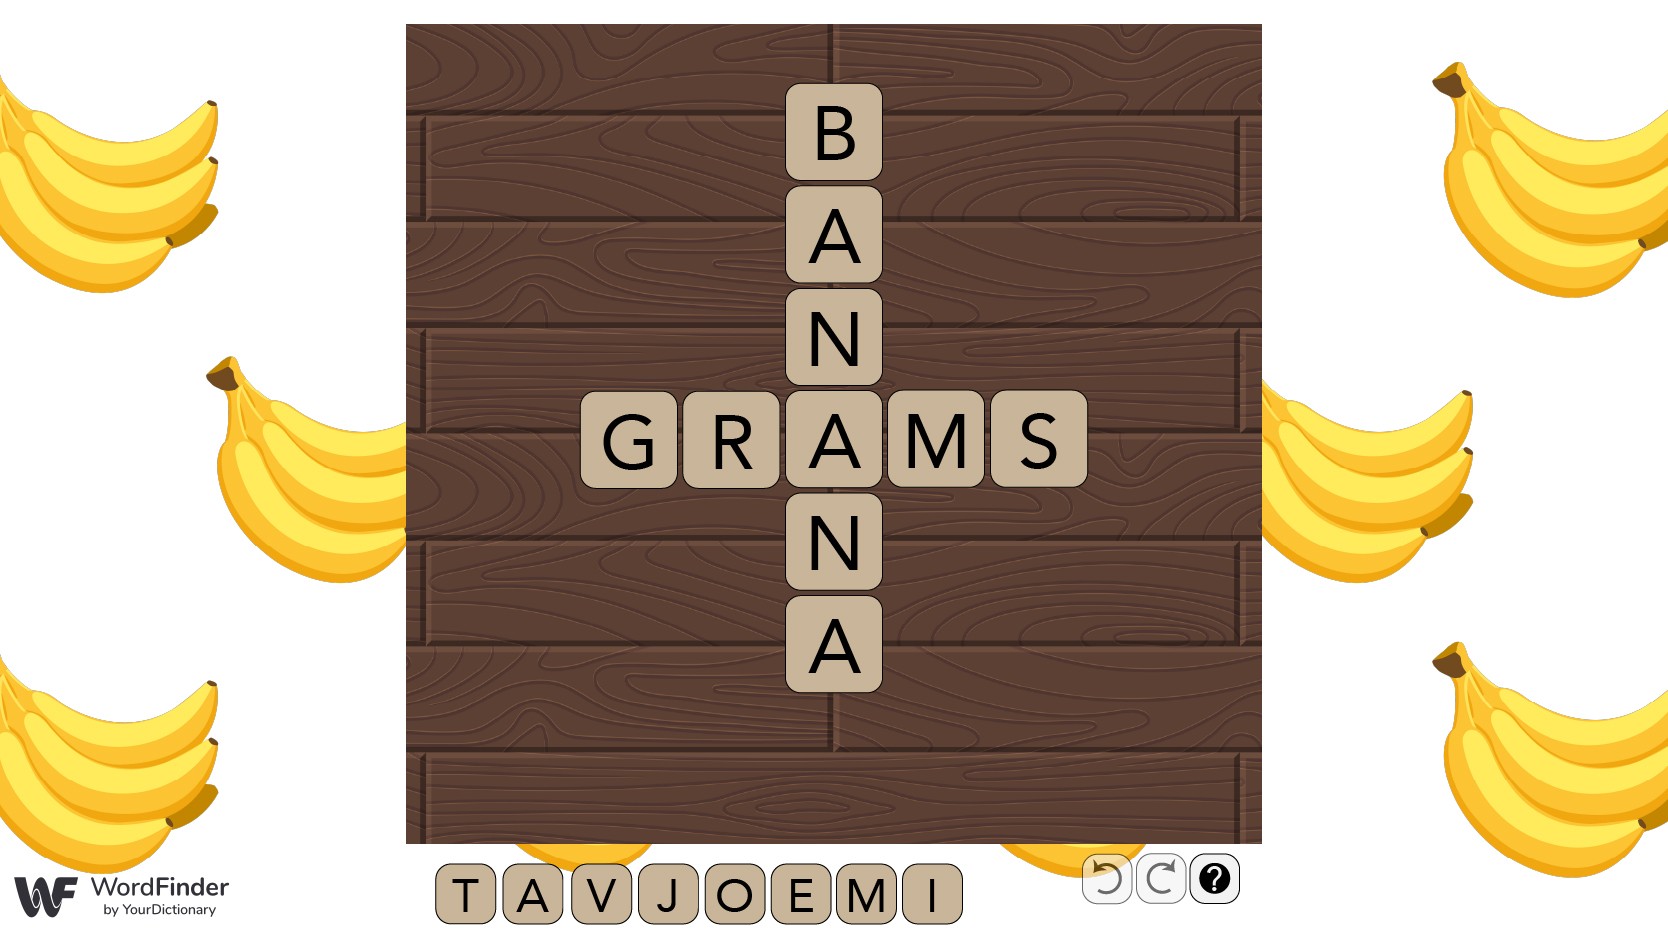 bananagrams online game in browser